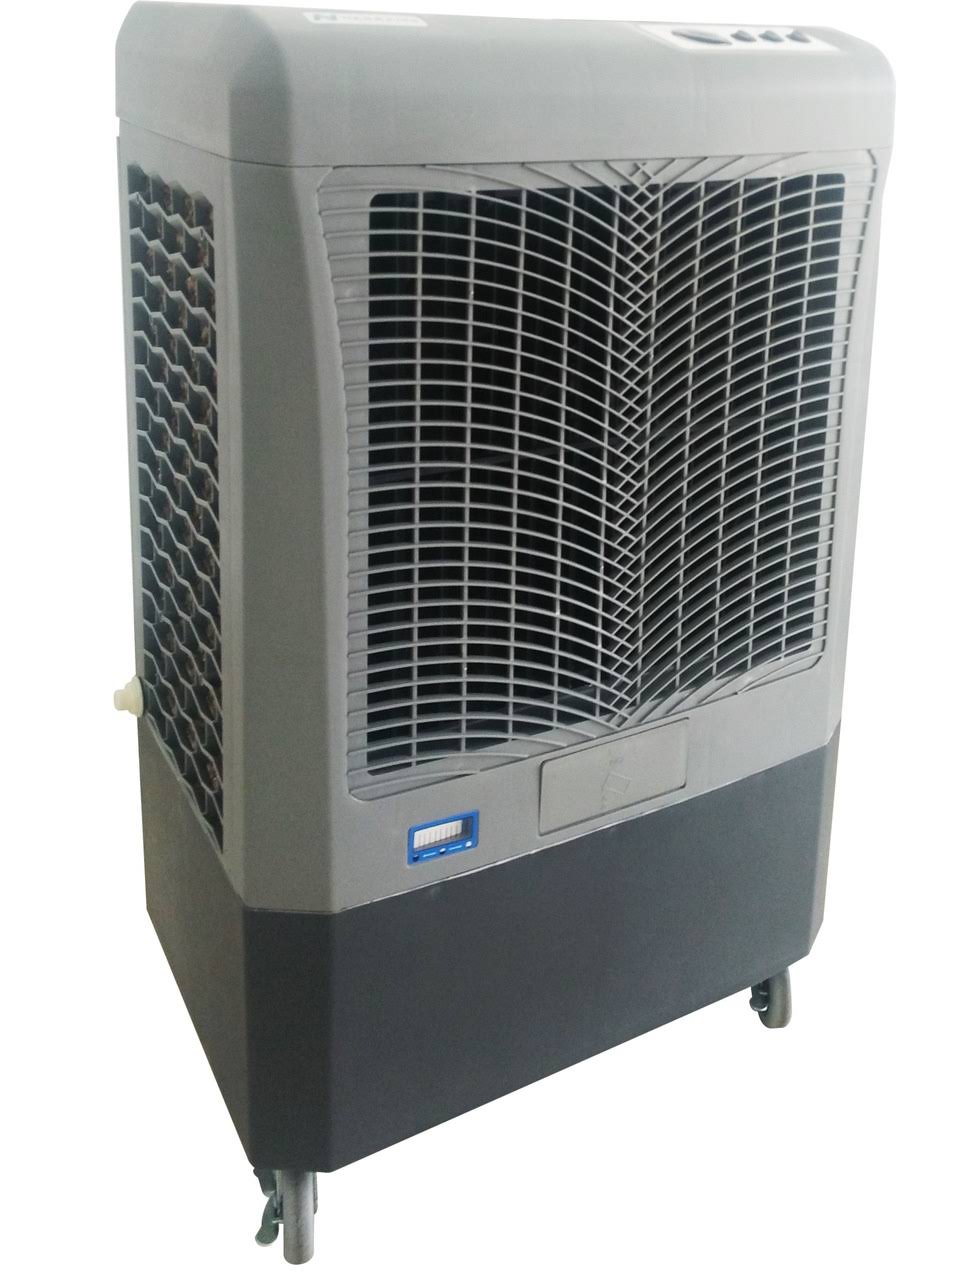 Hessaire MC37M Portable Evaporative Cooler - 750 Square Feet